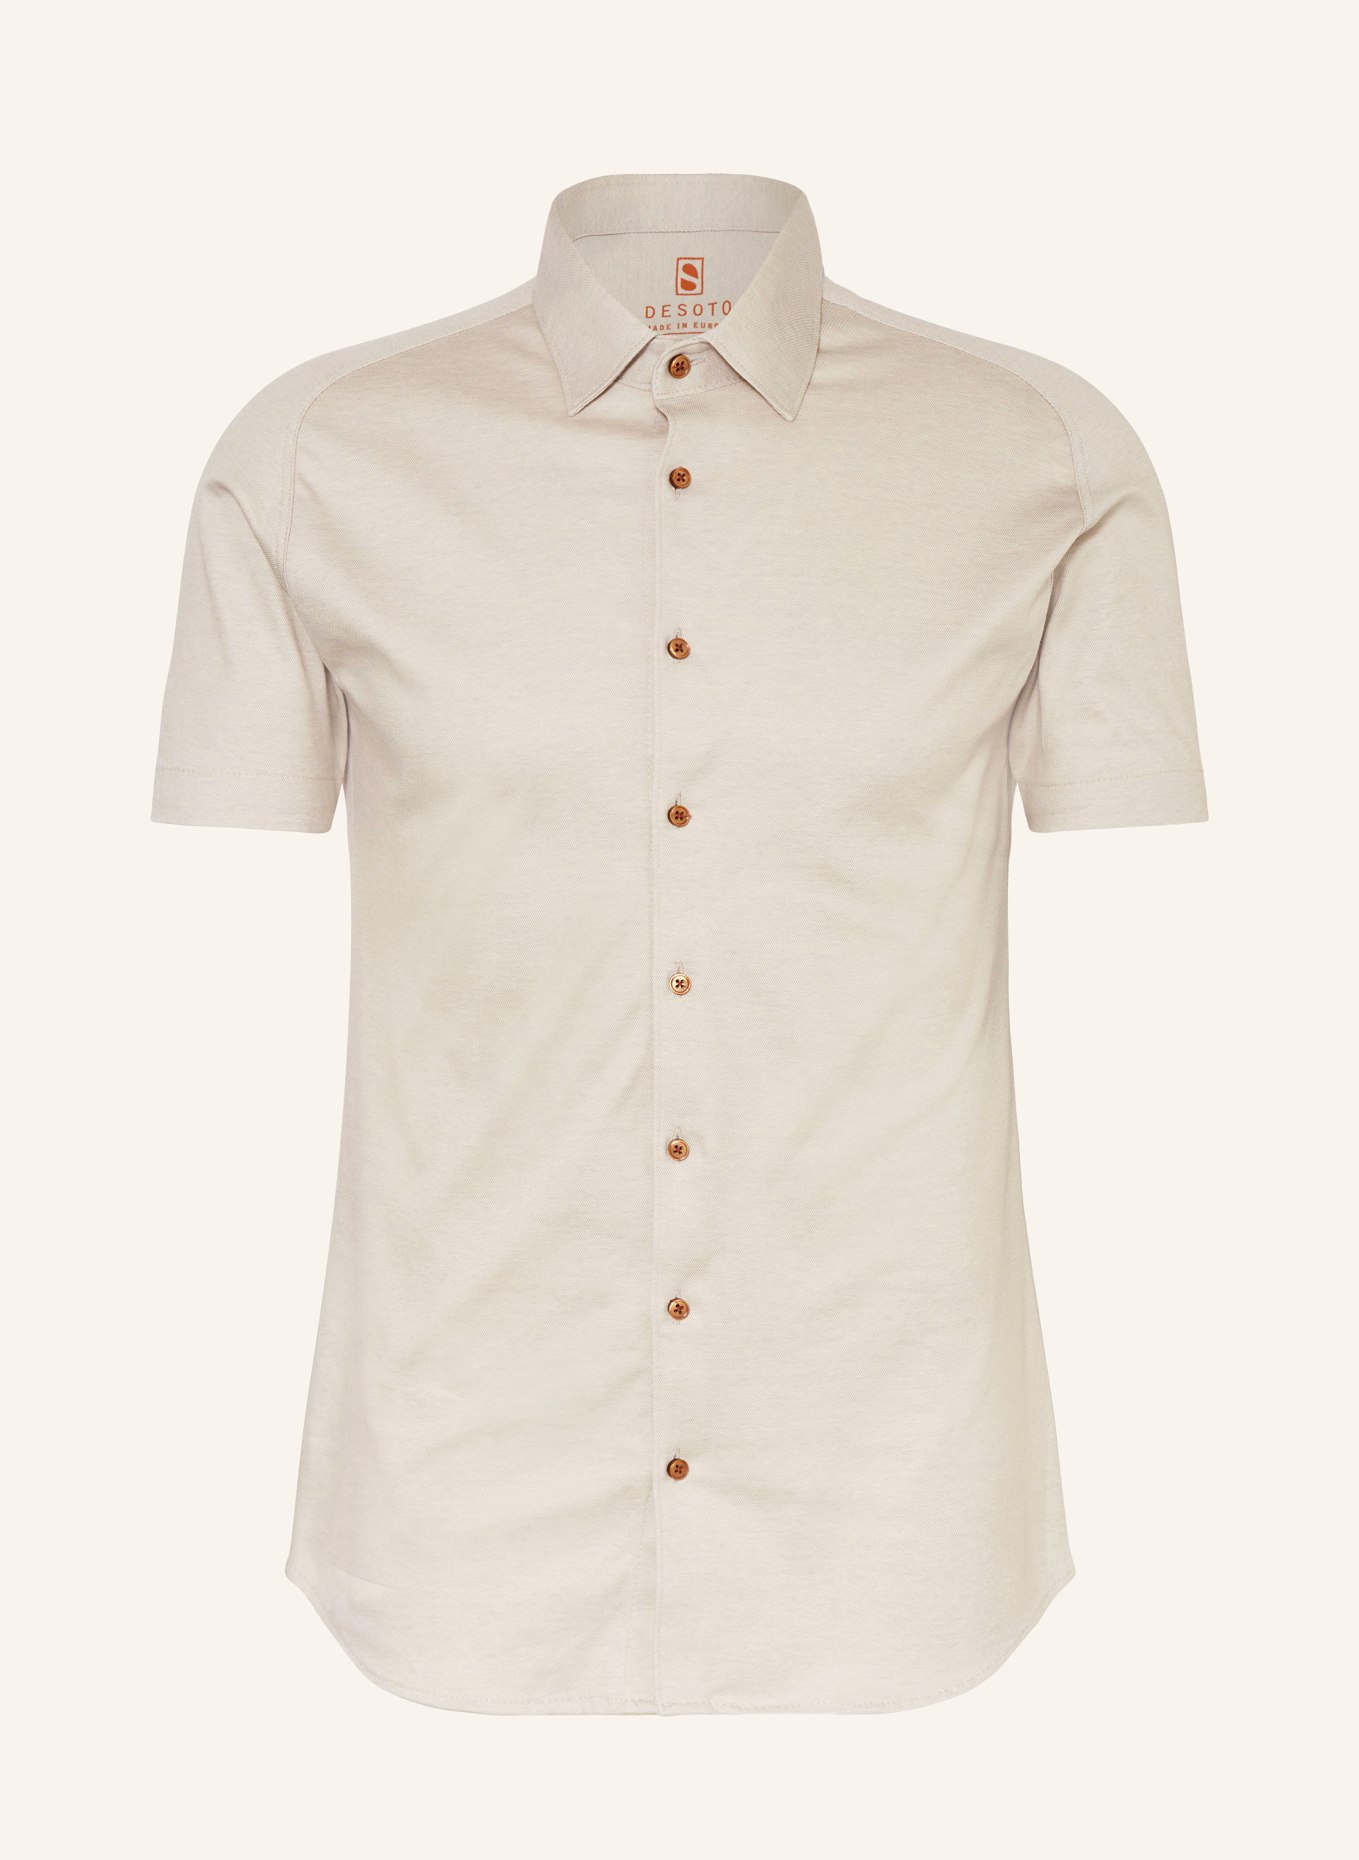 DESOTO Kurzarm-Hemd Slim Fit aus Jersey, Farbe: TAUPE (Bild 1)